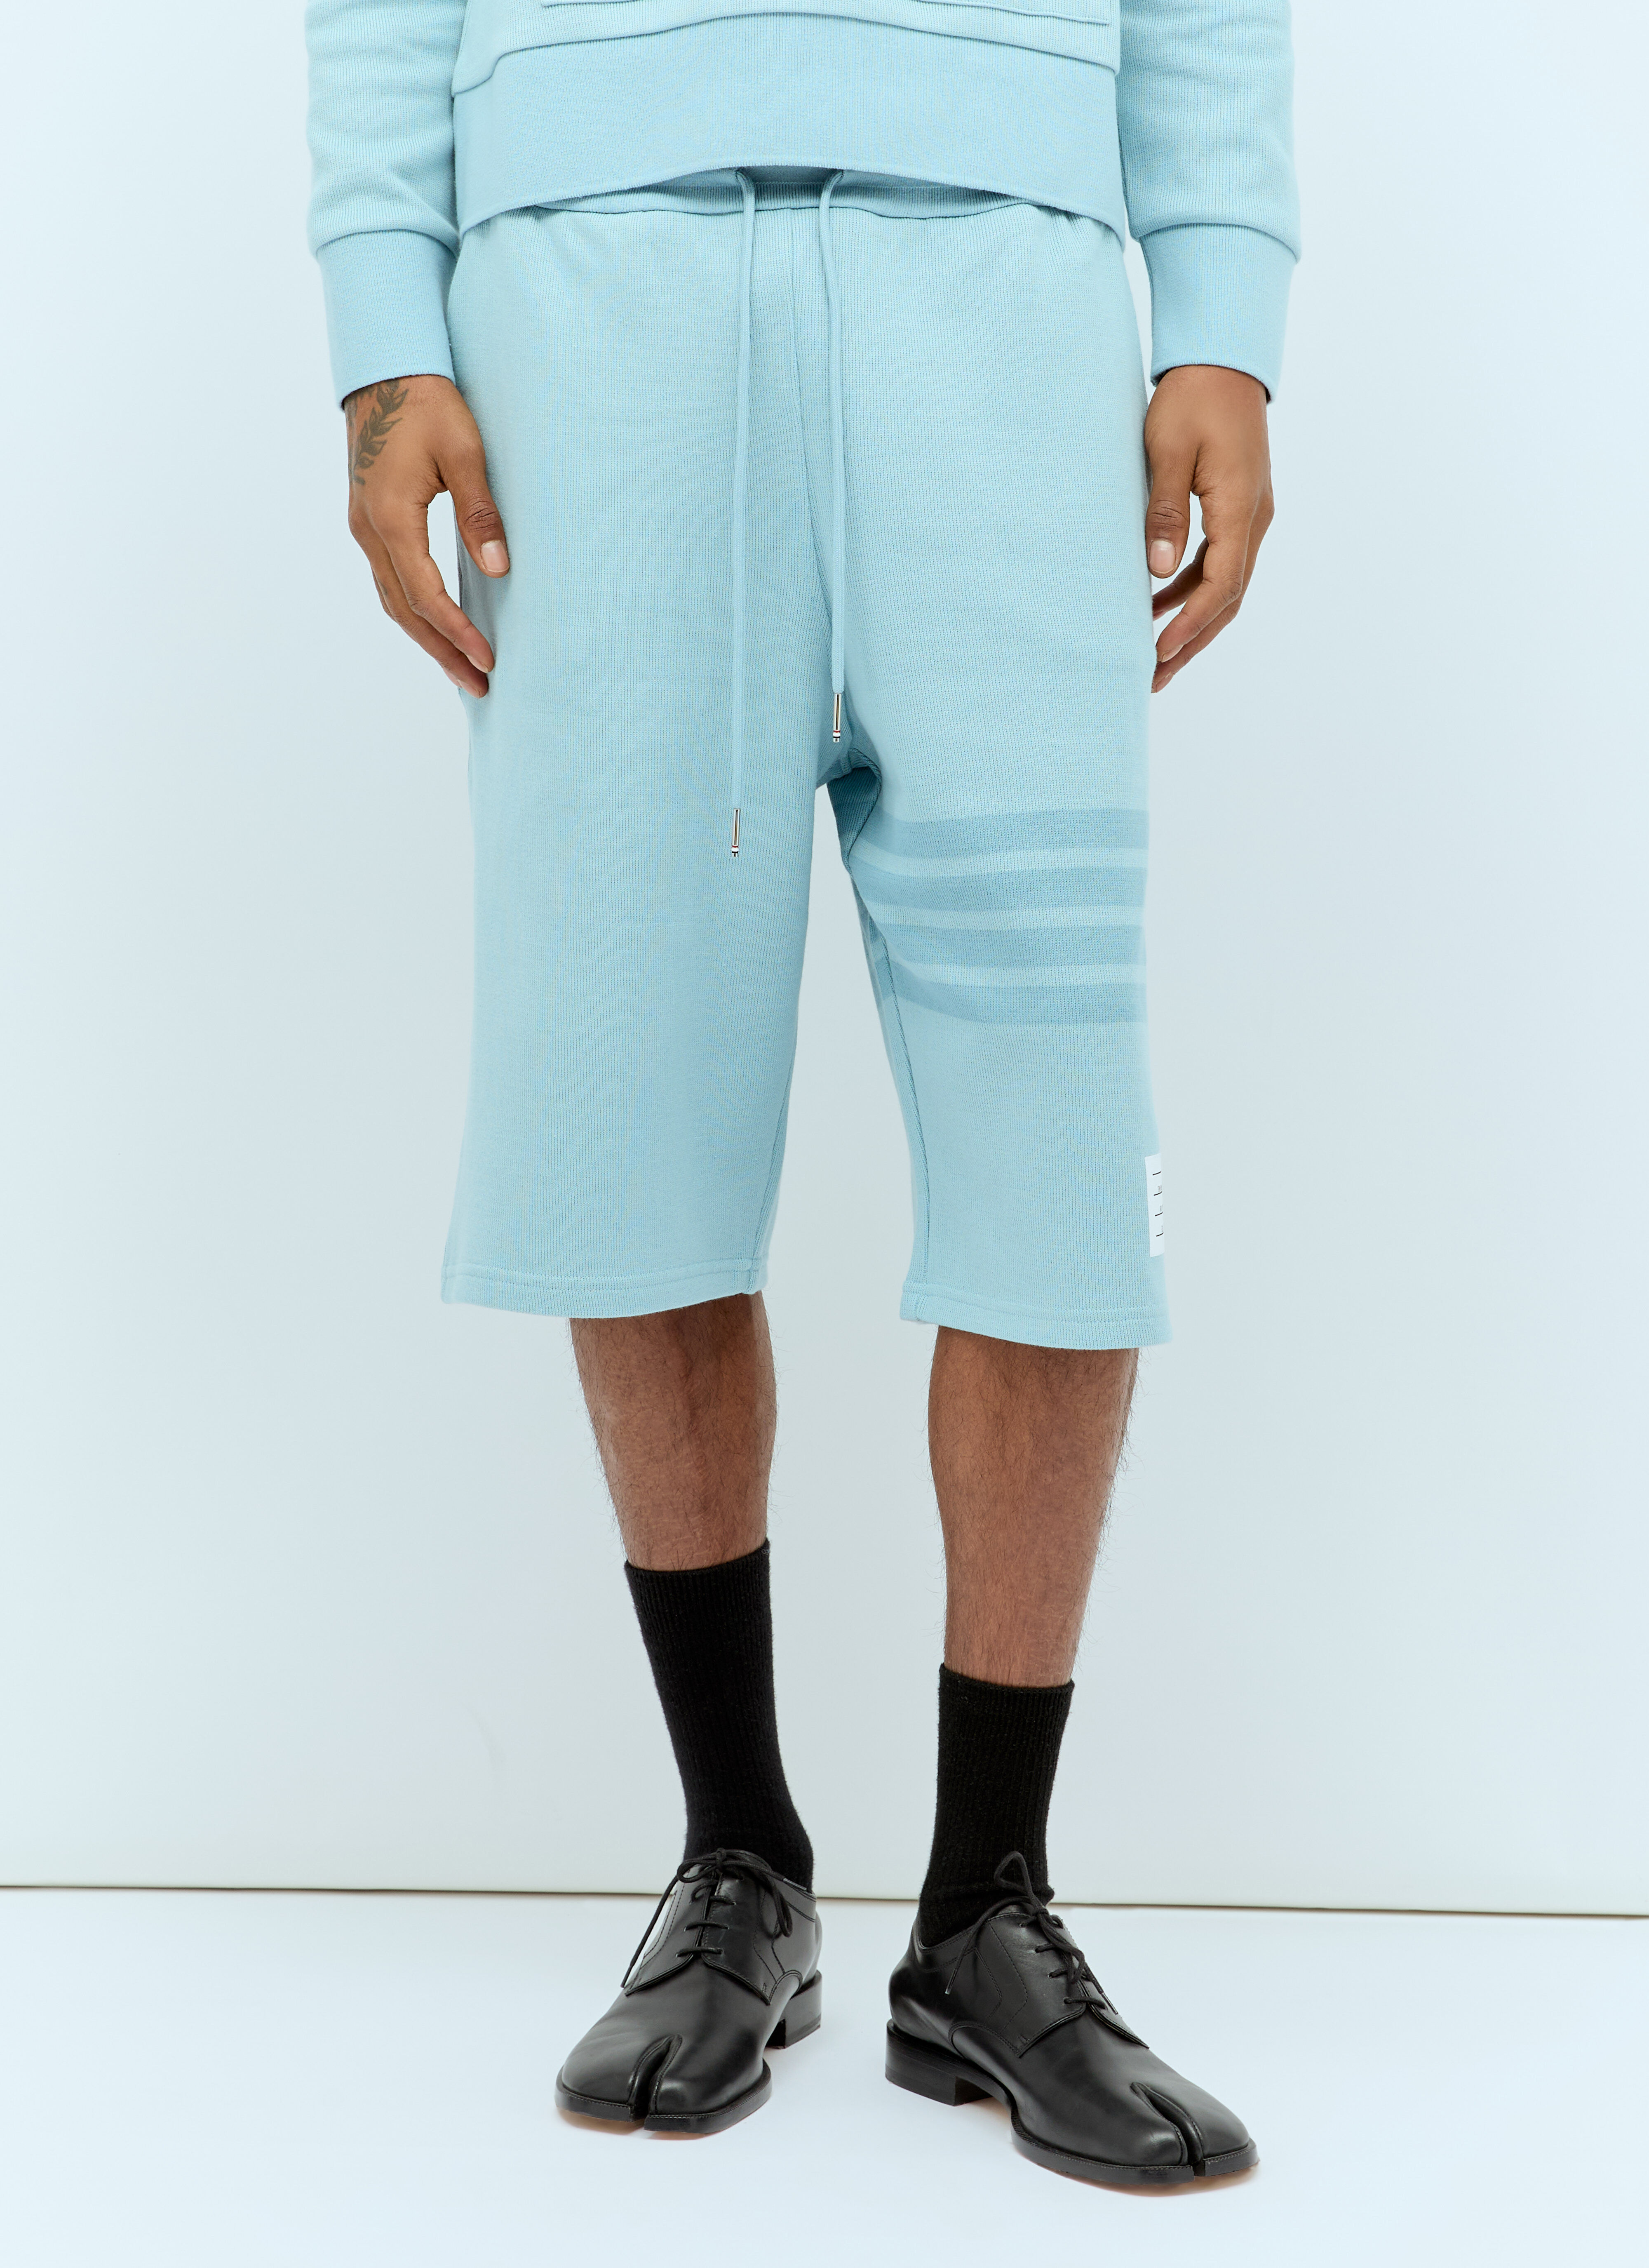 Boiler Room Knit Track Shorts Grey bor0156008